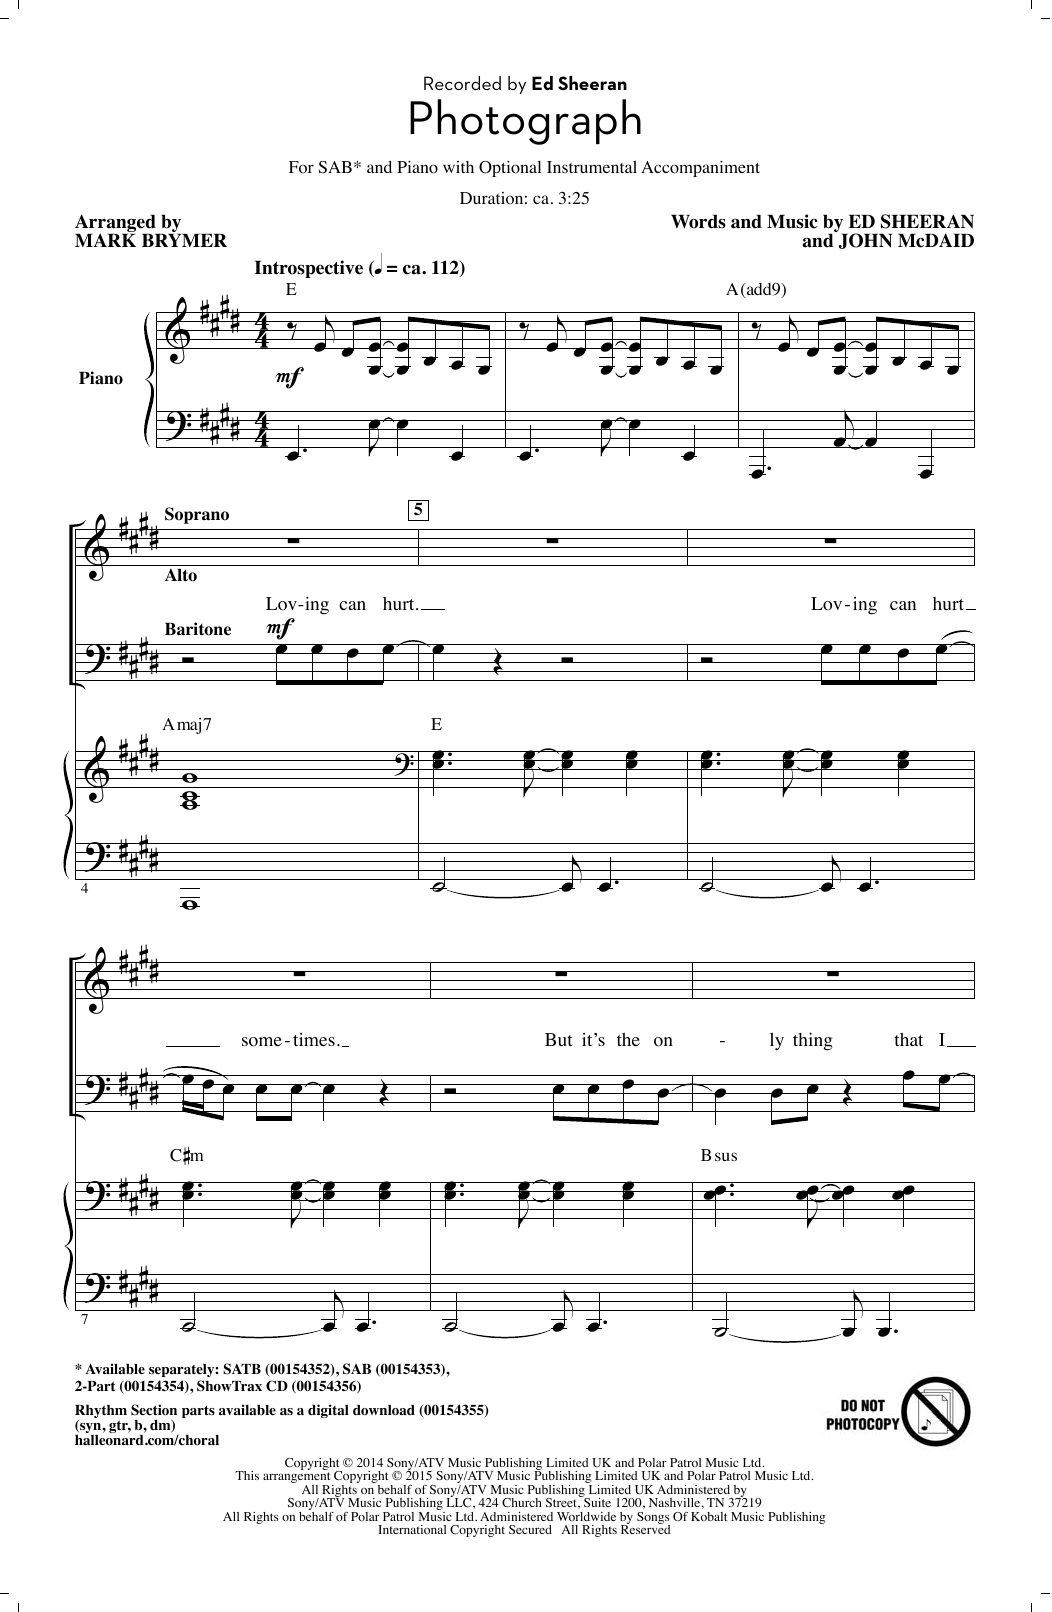 Ed Sheeran Photograph (arr. Mark Brymer) Sheet Music Notes & Chords for 2-Part Choir - Download or Print PDF